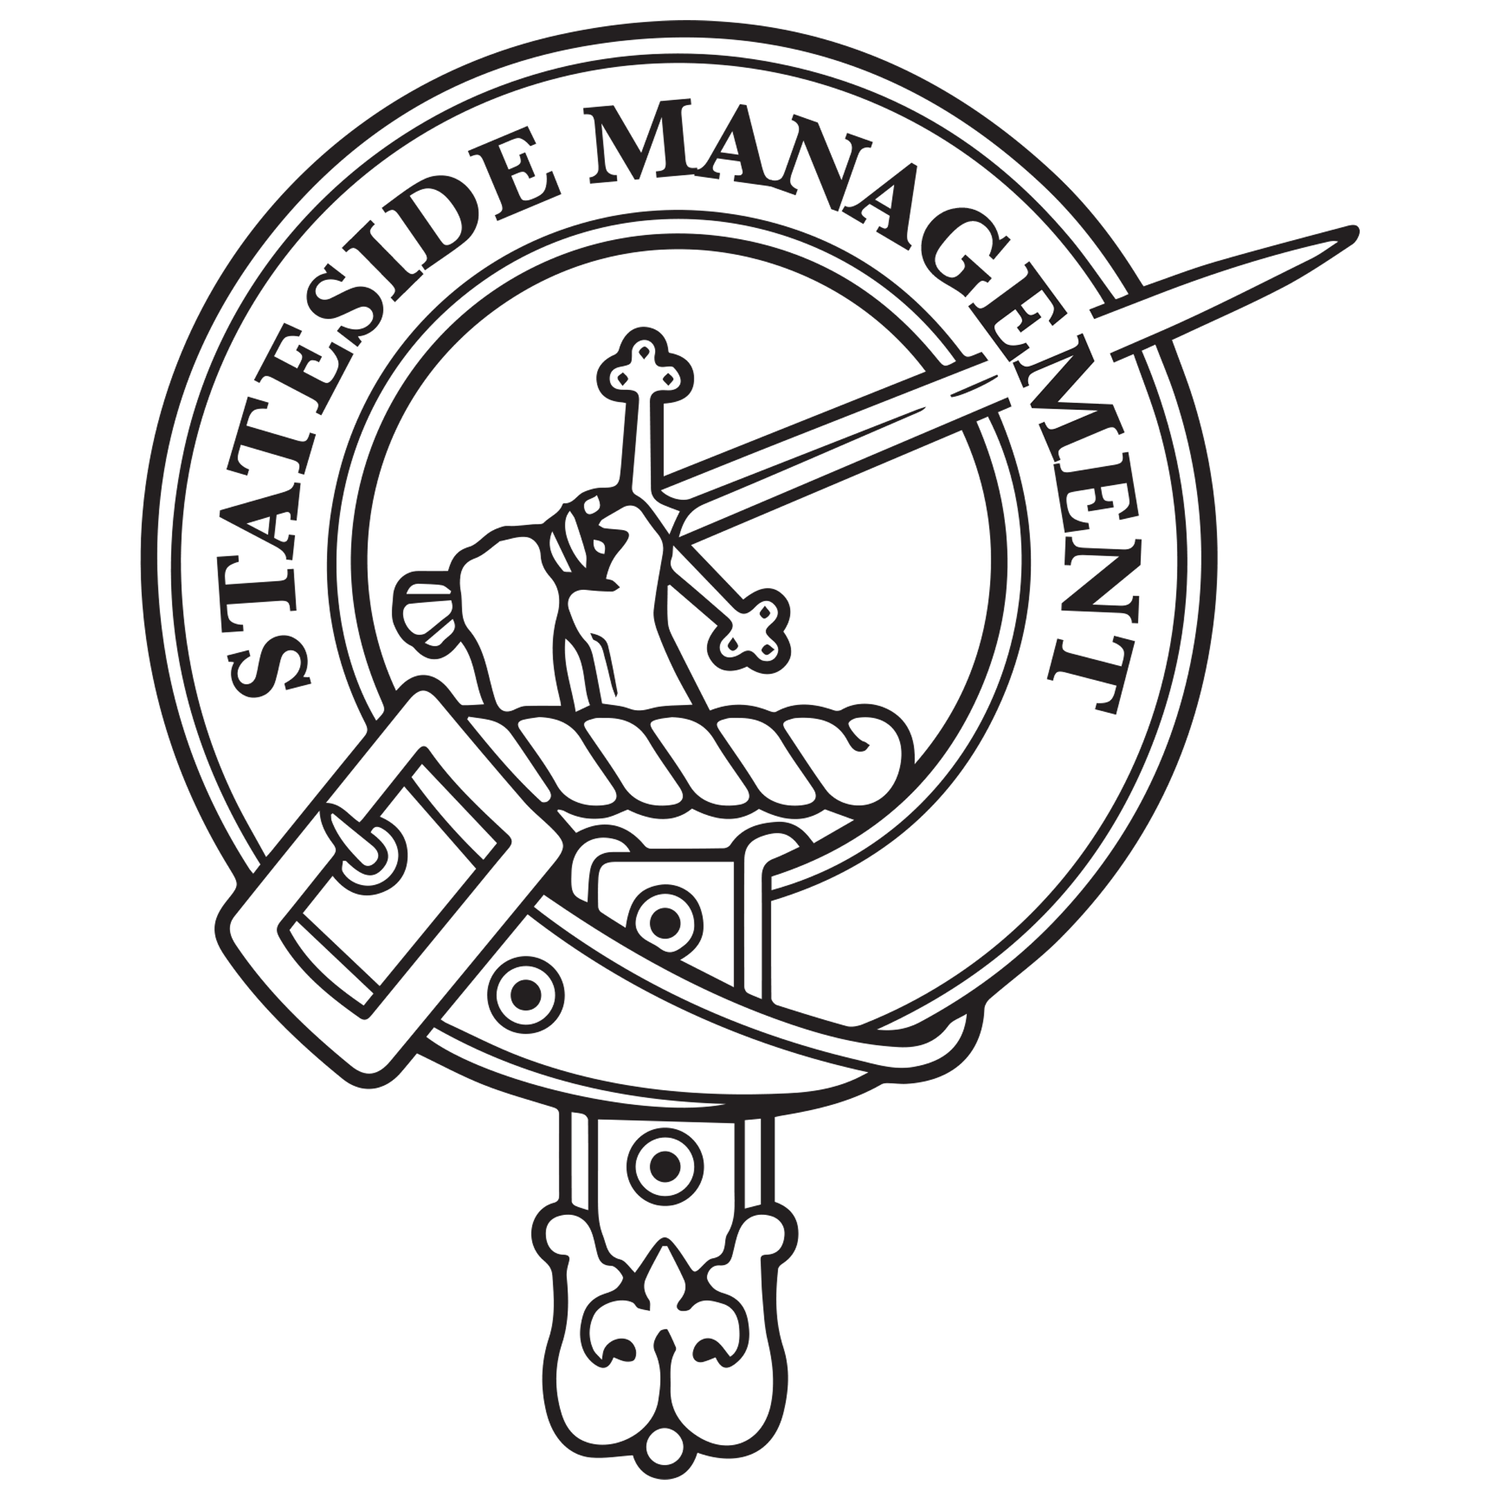 Stateside Management - A Producer Management Company